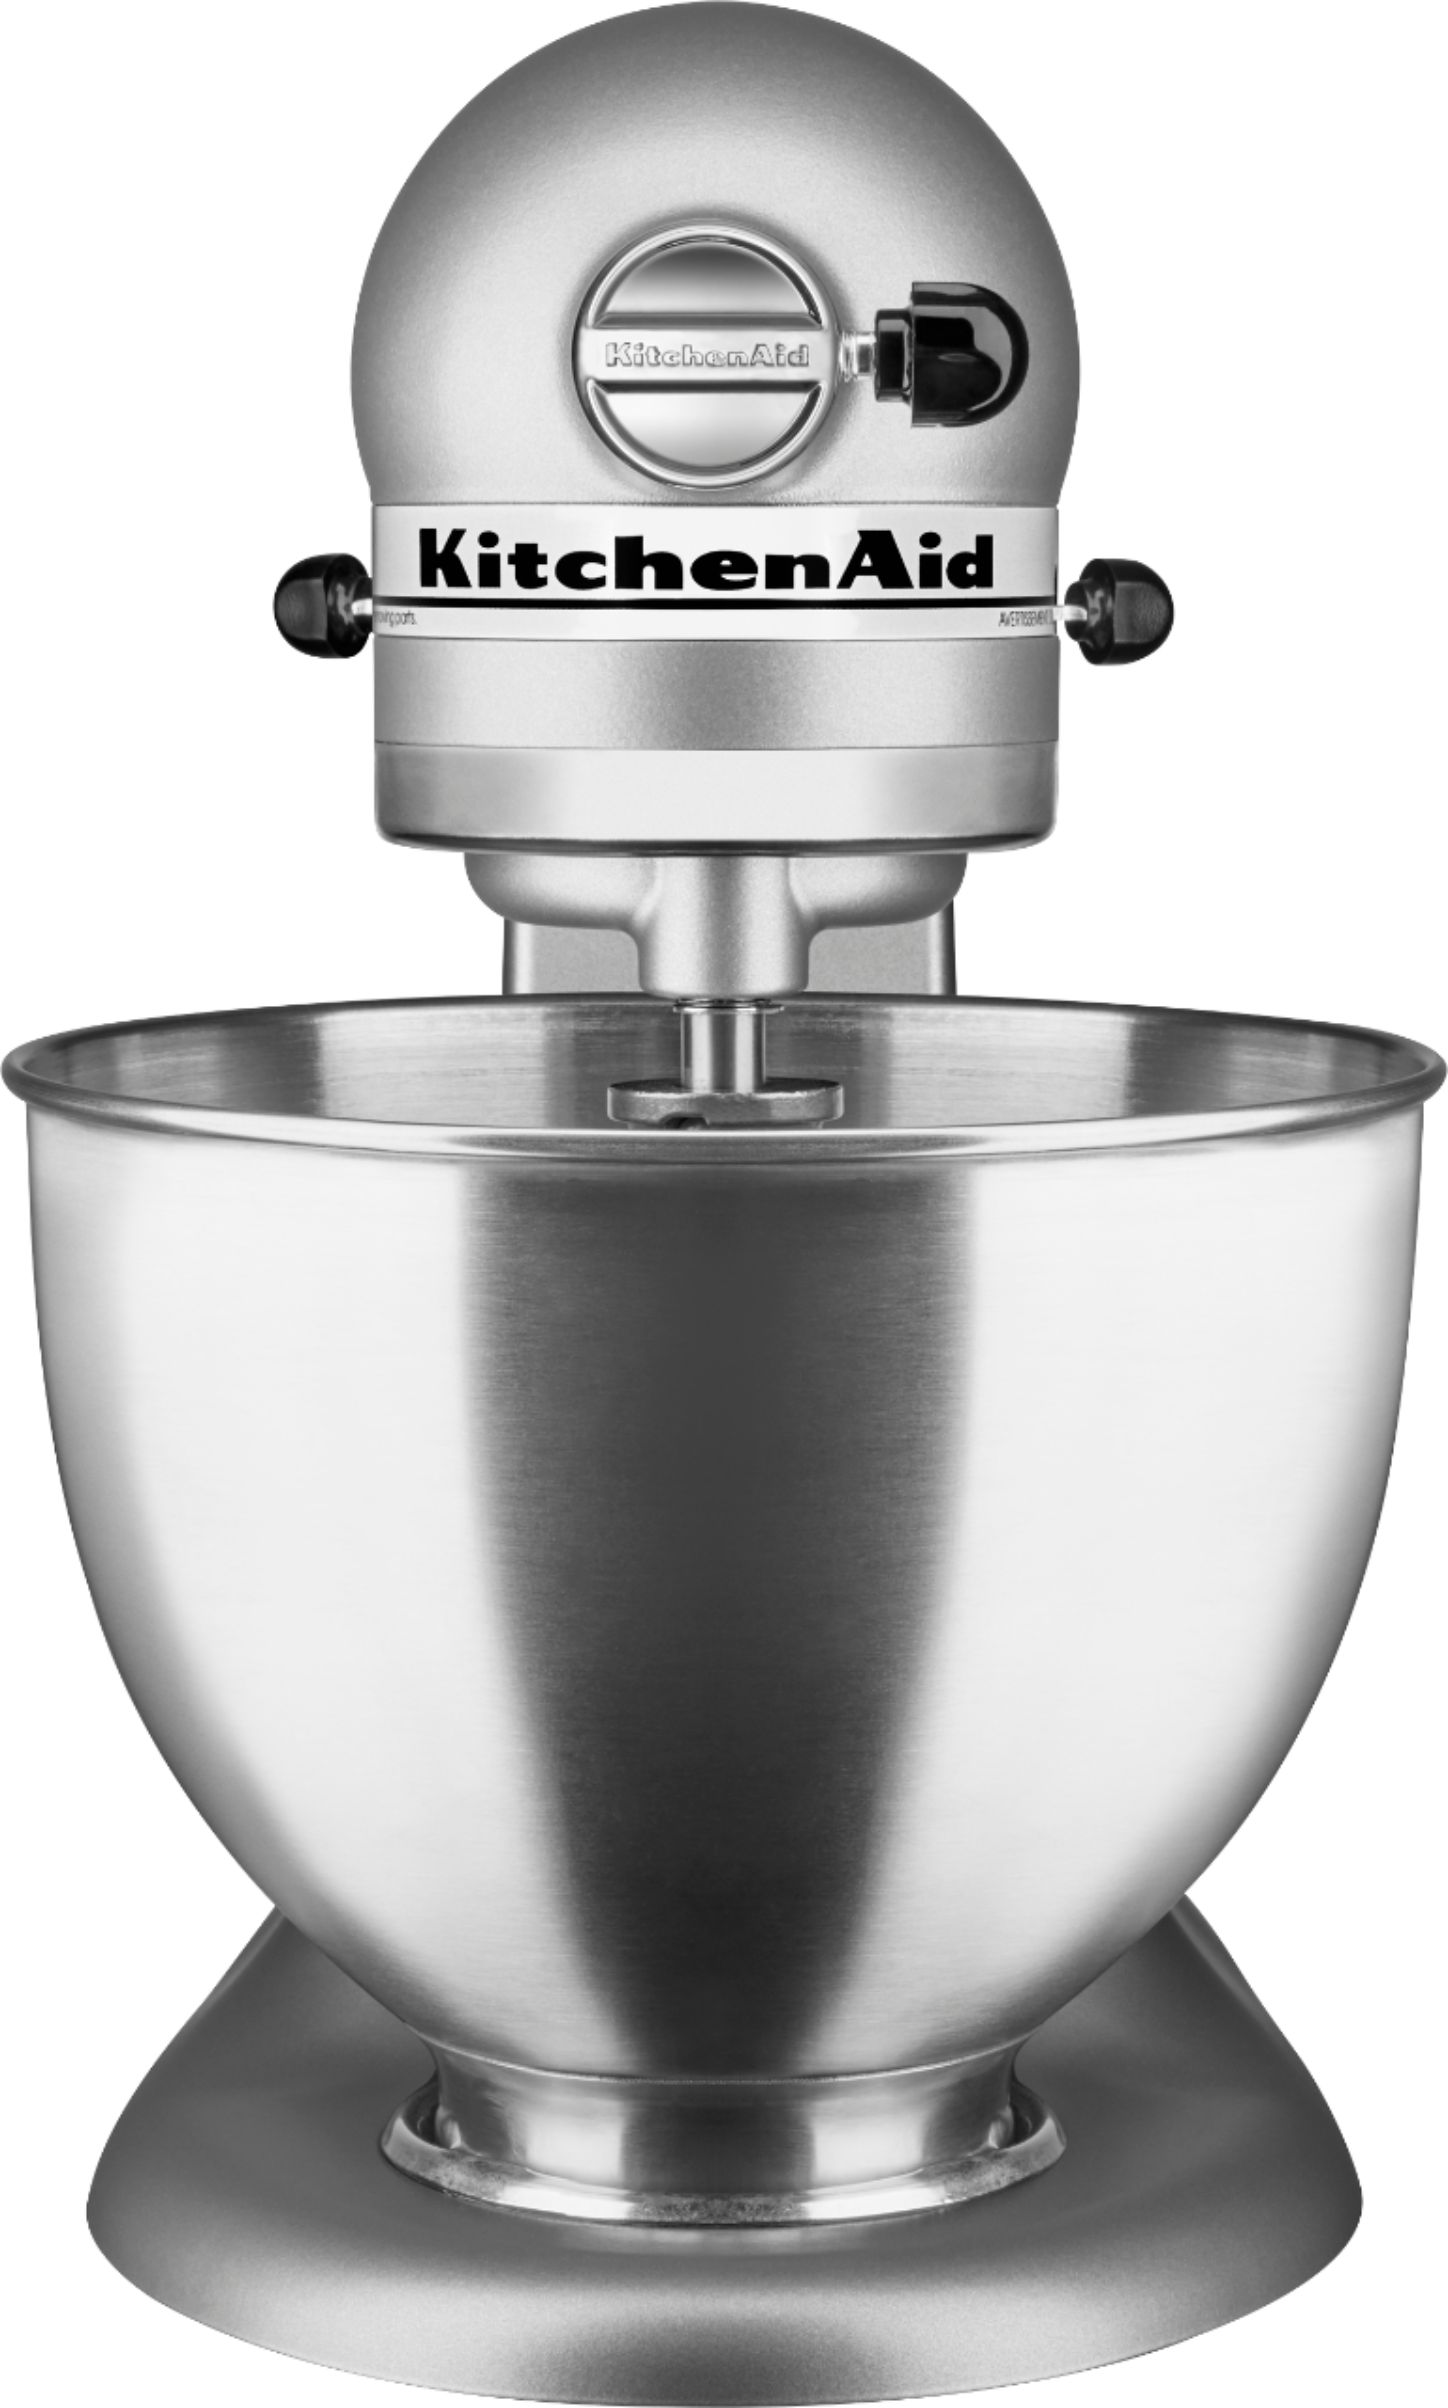 KitchenAid 4.5 Qt Stand Mixer Deluxe Model Unboxing 